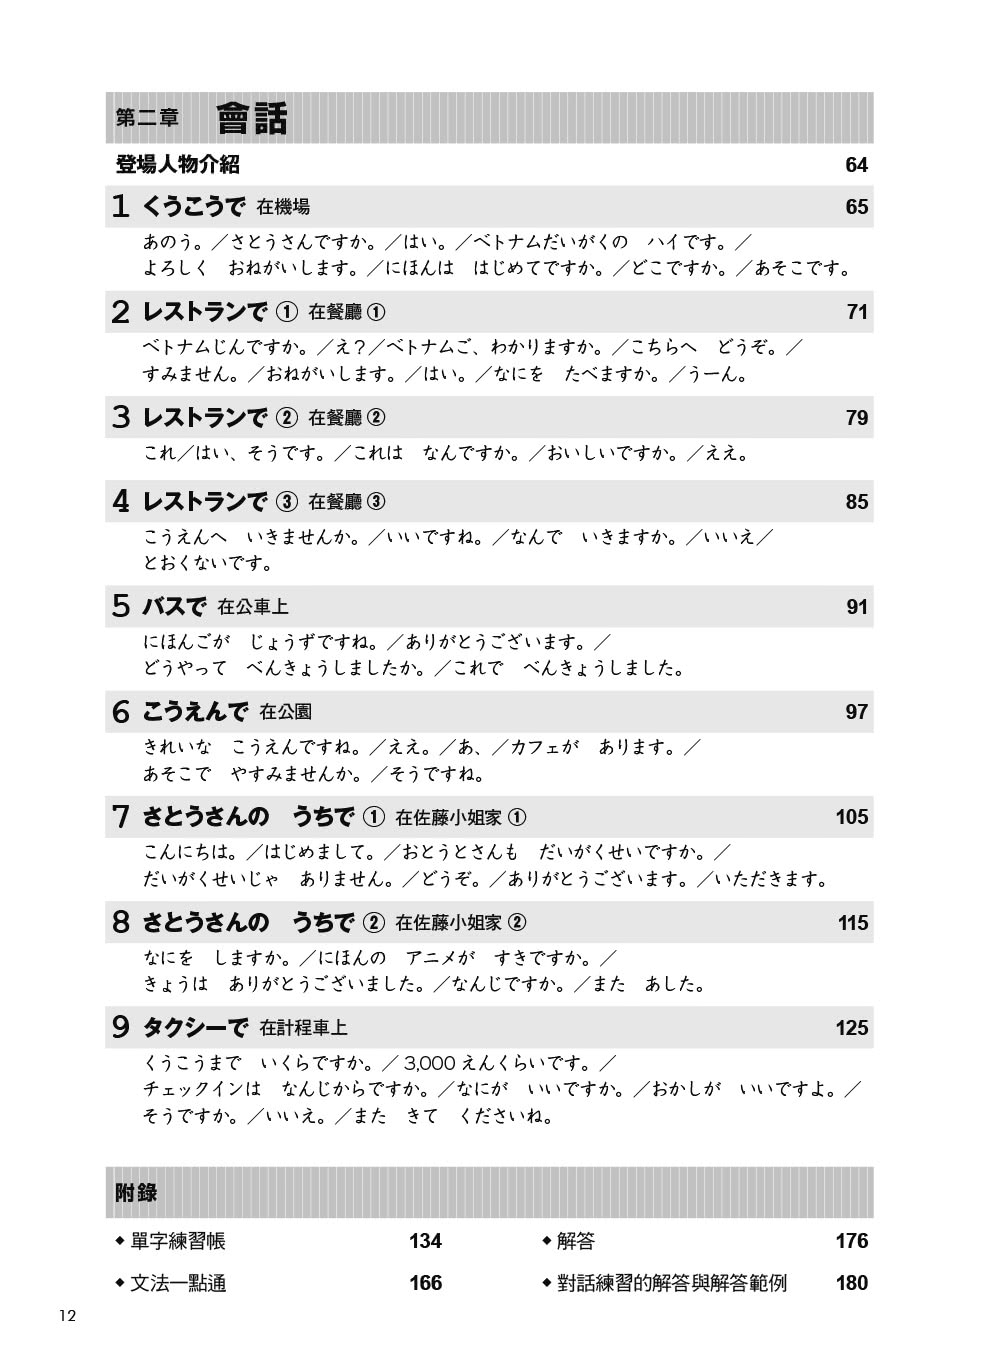 TRY！START 日本語的第一步：3歲到100歲都能學會的50音會話（附QR Code線上音檔）